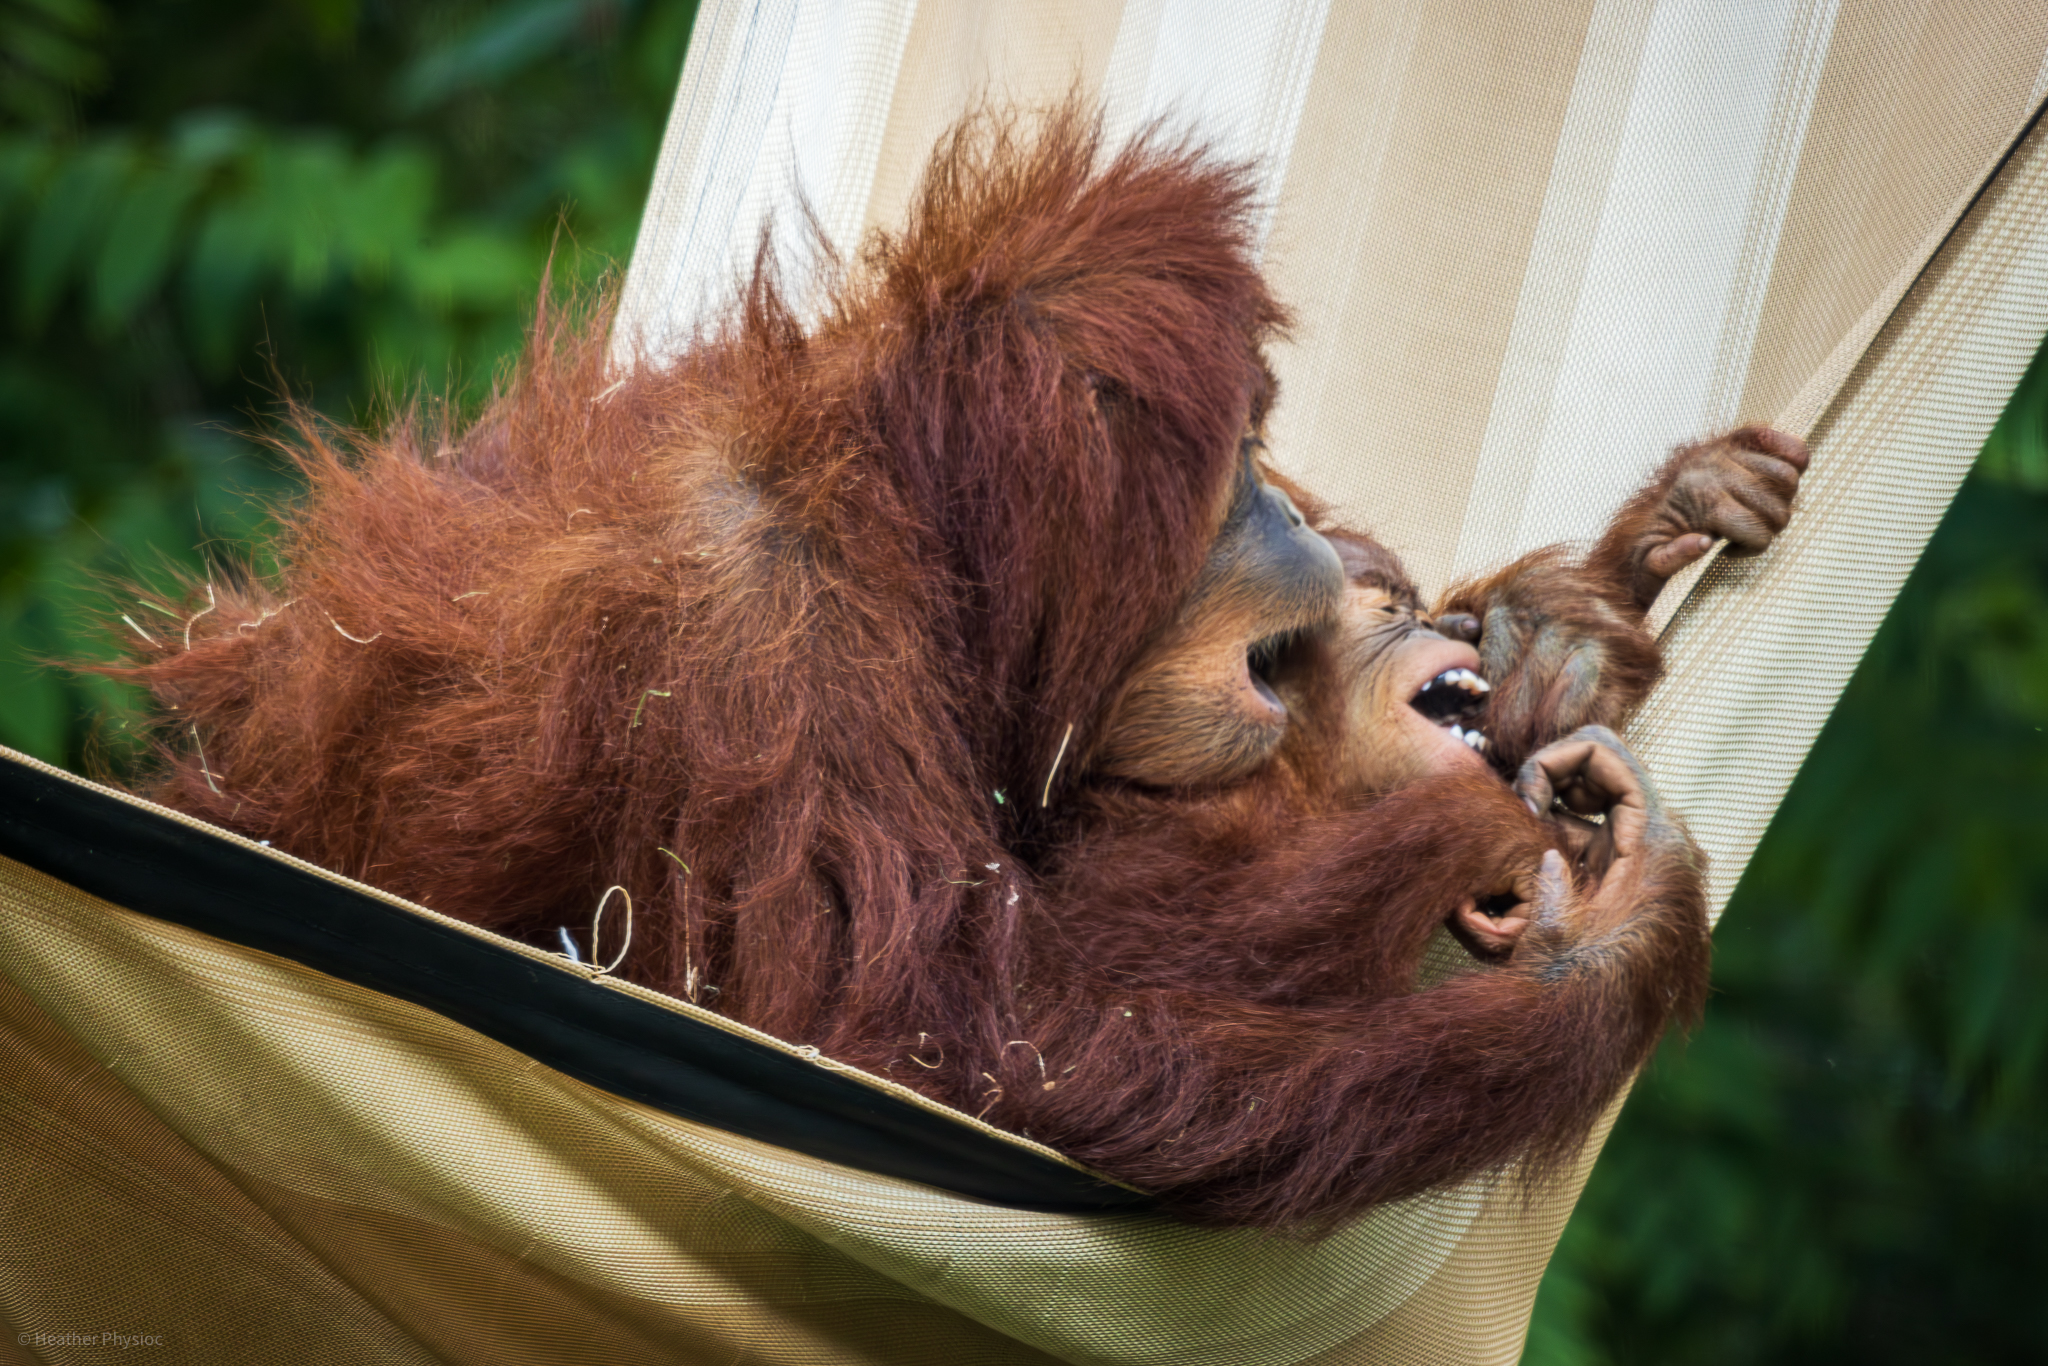 Sumatran orangutan siblings Aisha & Kaja snuggling in a hammock at the San Diego Zoo